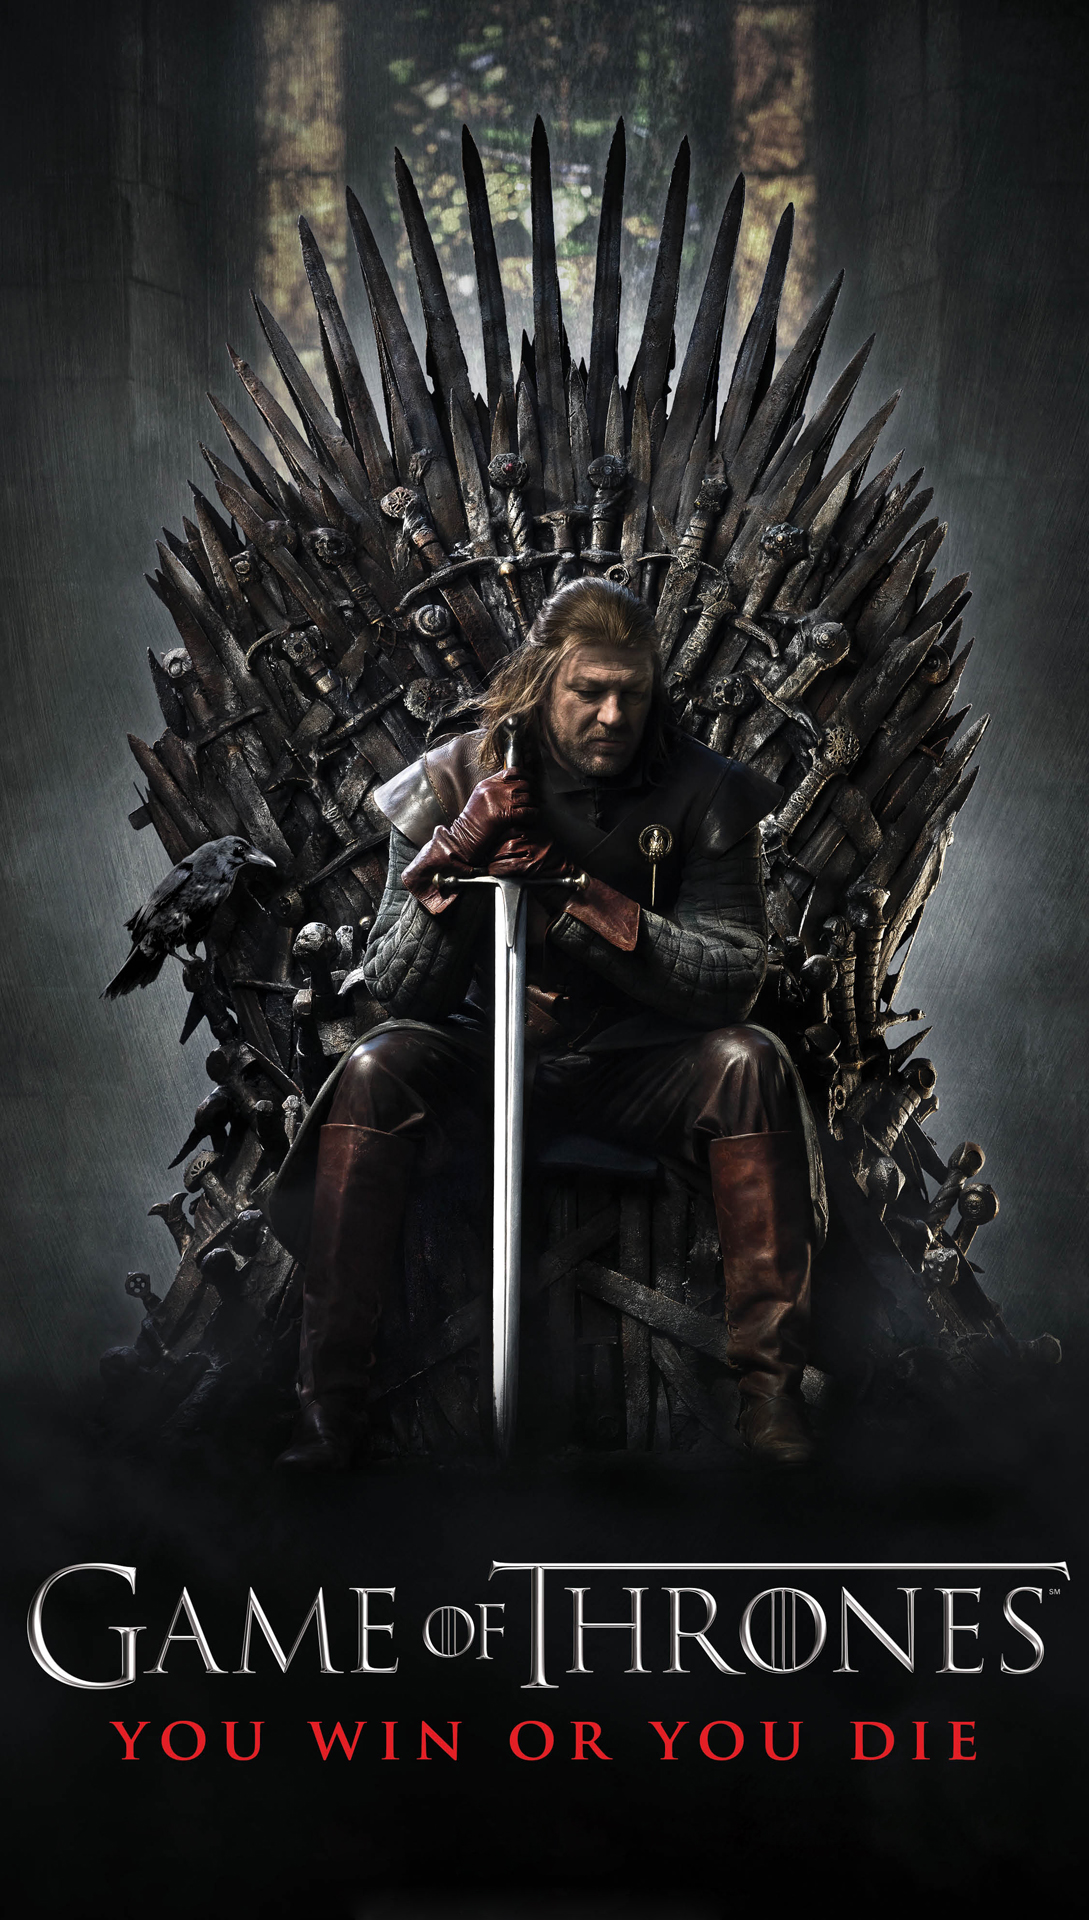 game of thrones a portata di mano,film,buio,copertina,manifesto,sedia